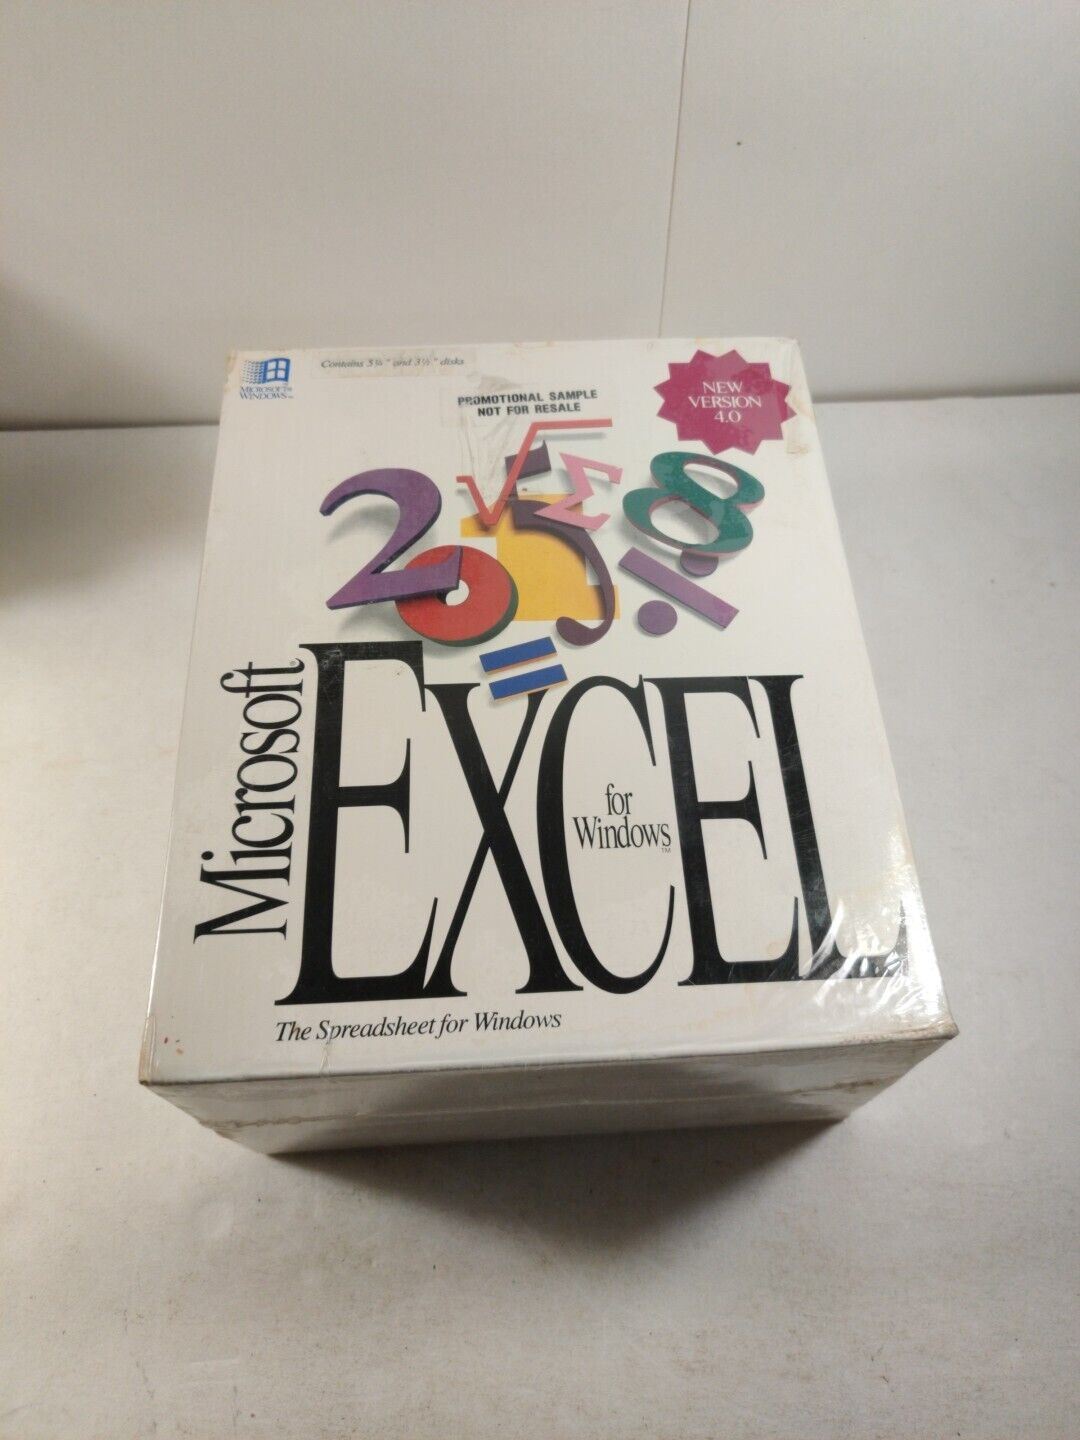 Microsoft Excel 4.0 for Windows Box Set SEALED Promotional Sample Not For Resale